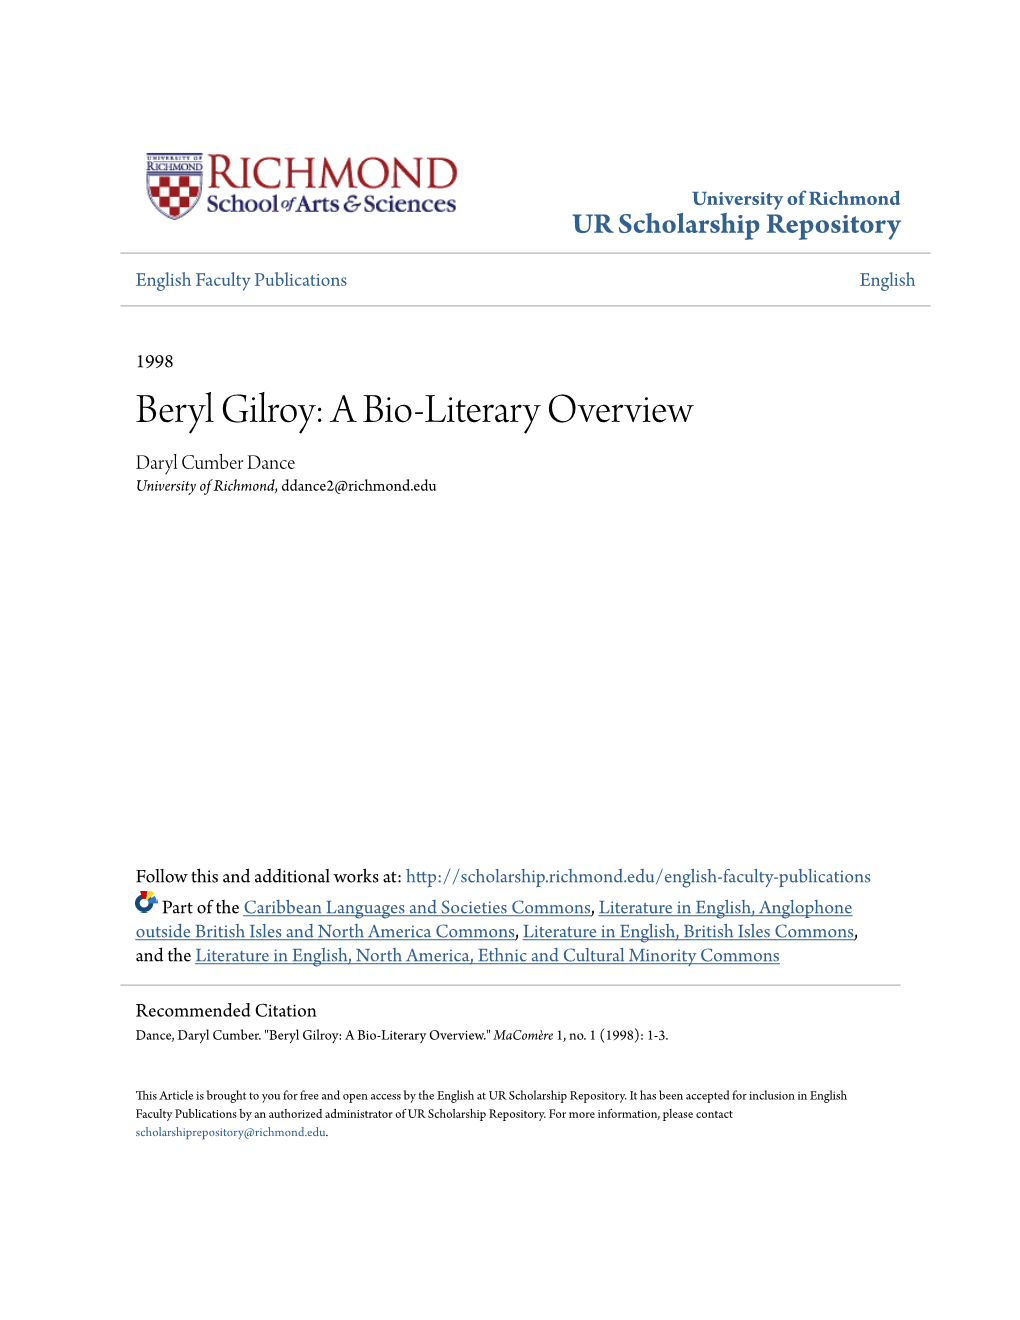 Beryl Gilroy: a Bio-Literary Overview Daryl Cumber Dance University of Richmond, Ddance2@Richmond.Edu